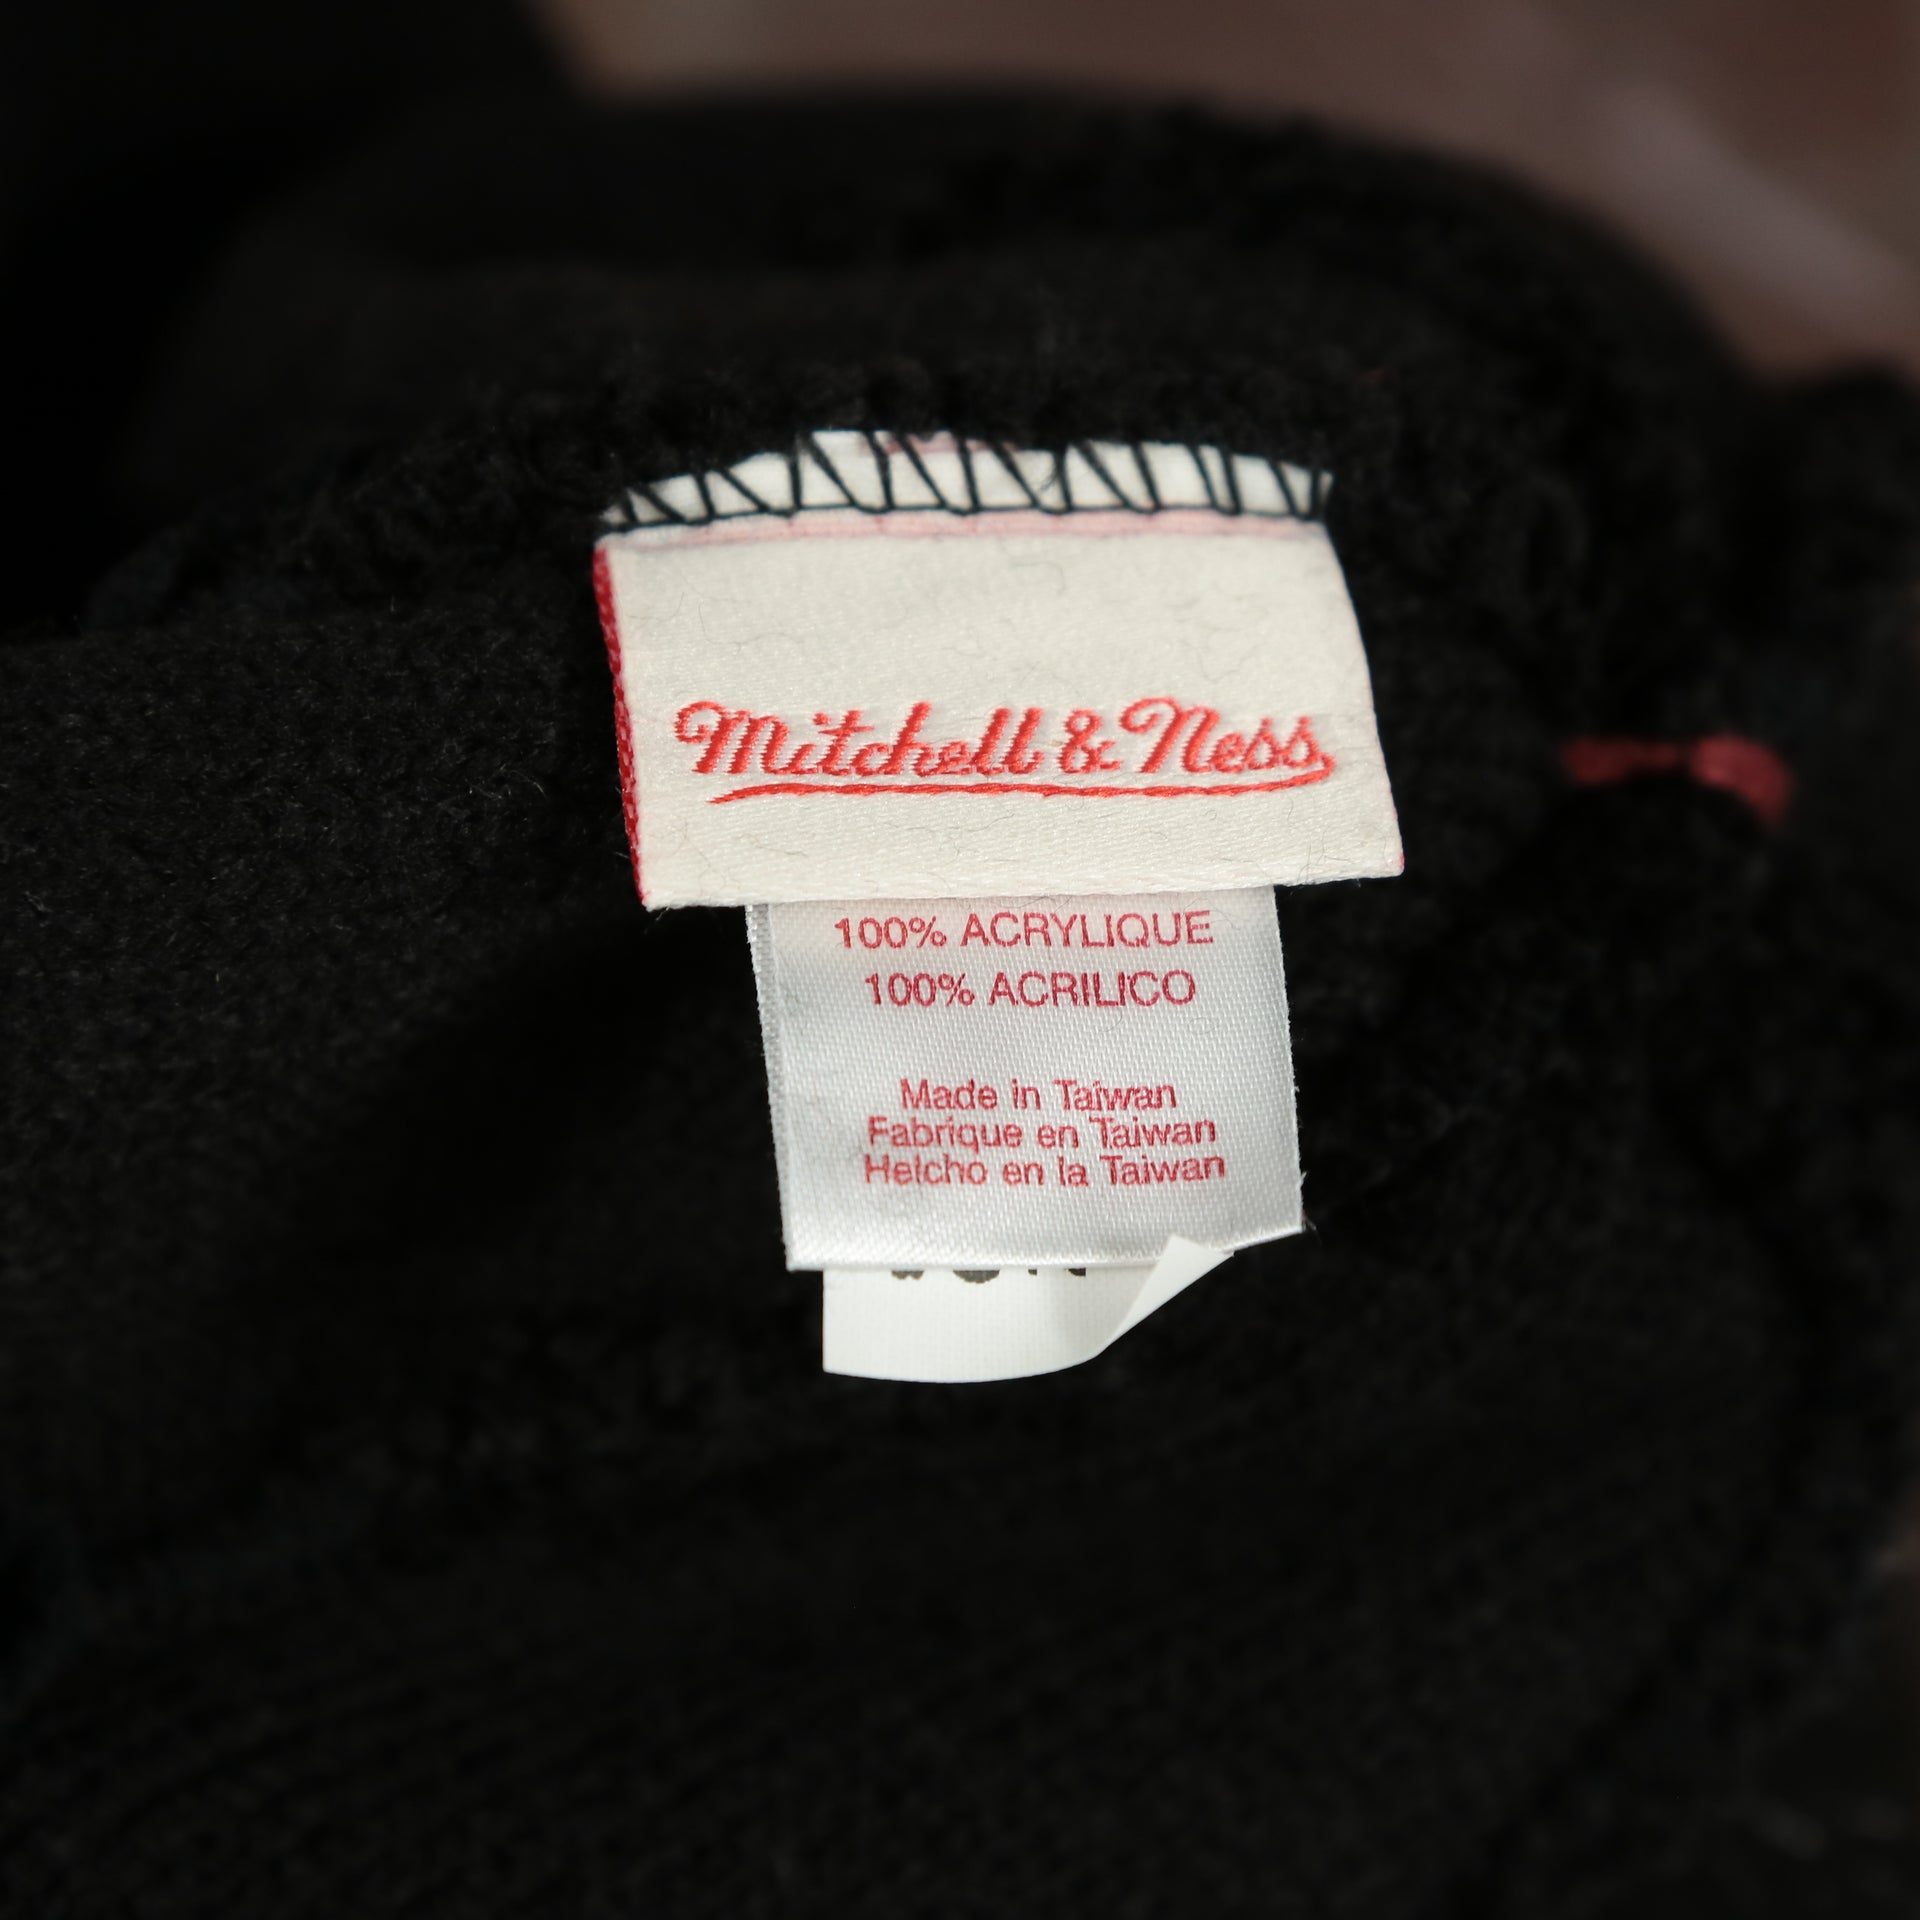 mitchell and ness label on the Miami Heat Colorway Cuffed Pom Pom Winter Beanie | Black Winter Beanie